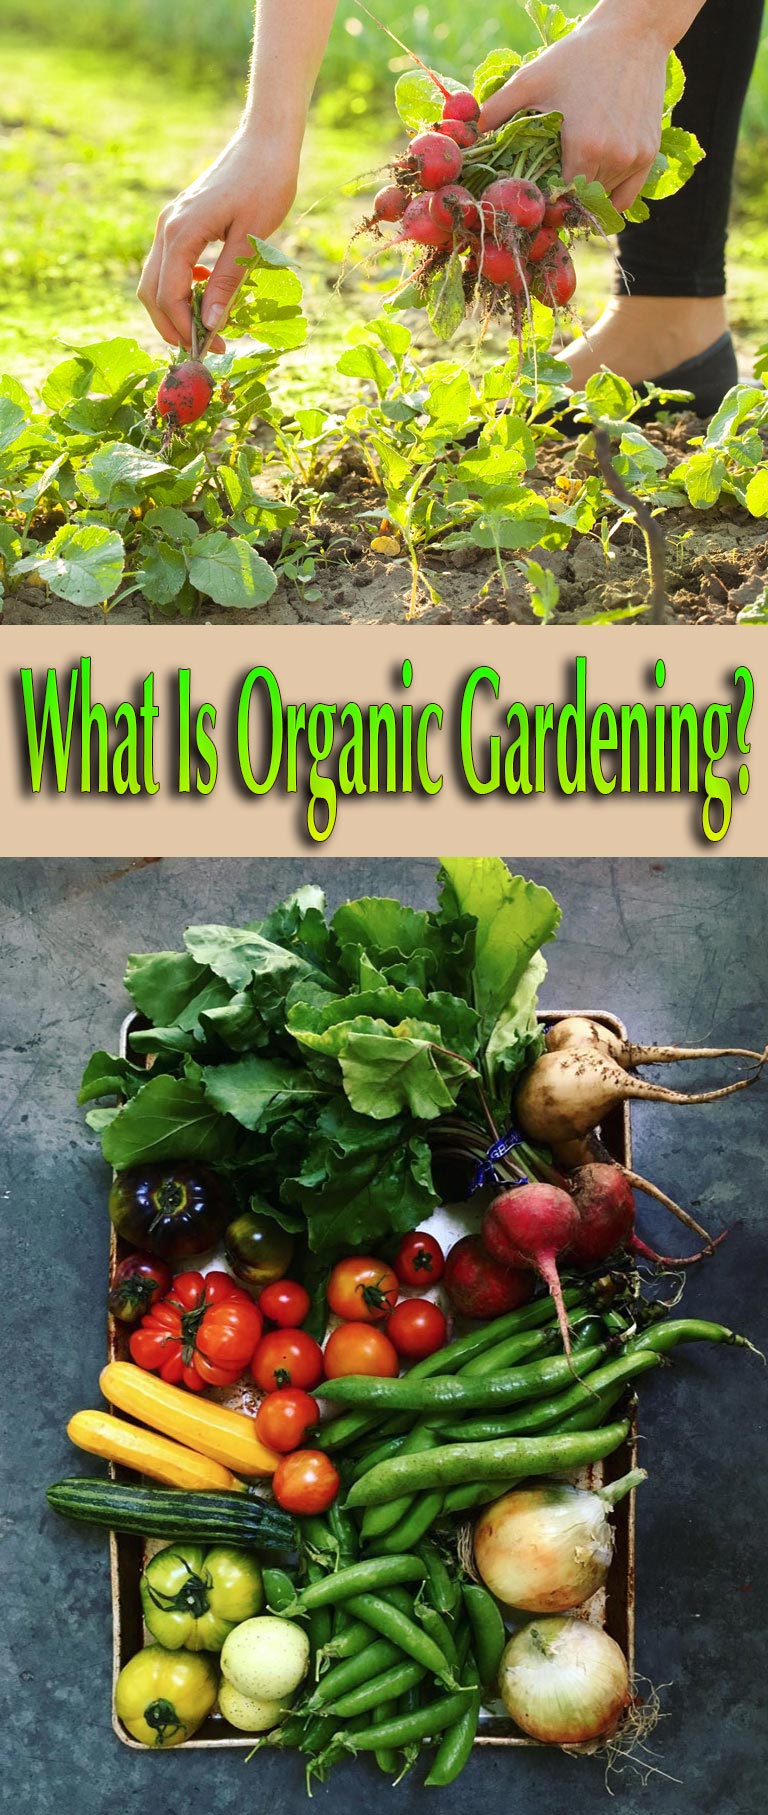 What Is Organic Gardening?